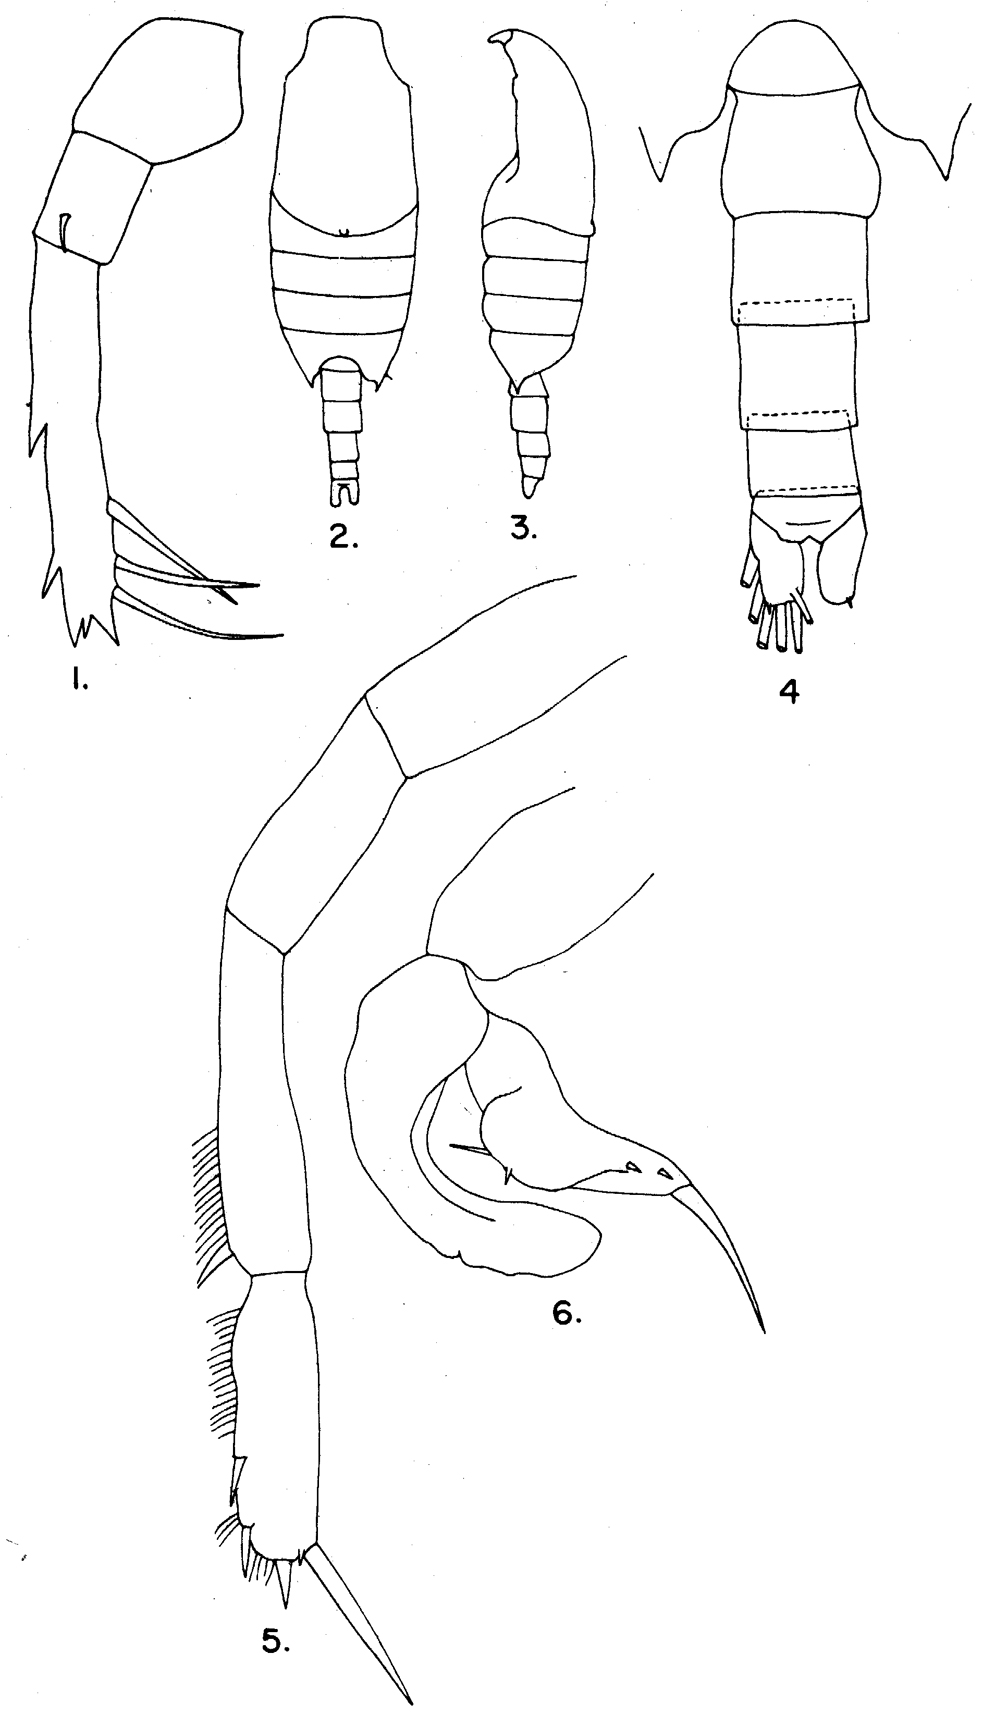 Species Candacia catula - Plate 6 of morphological figures